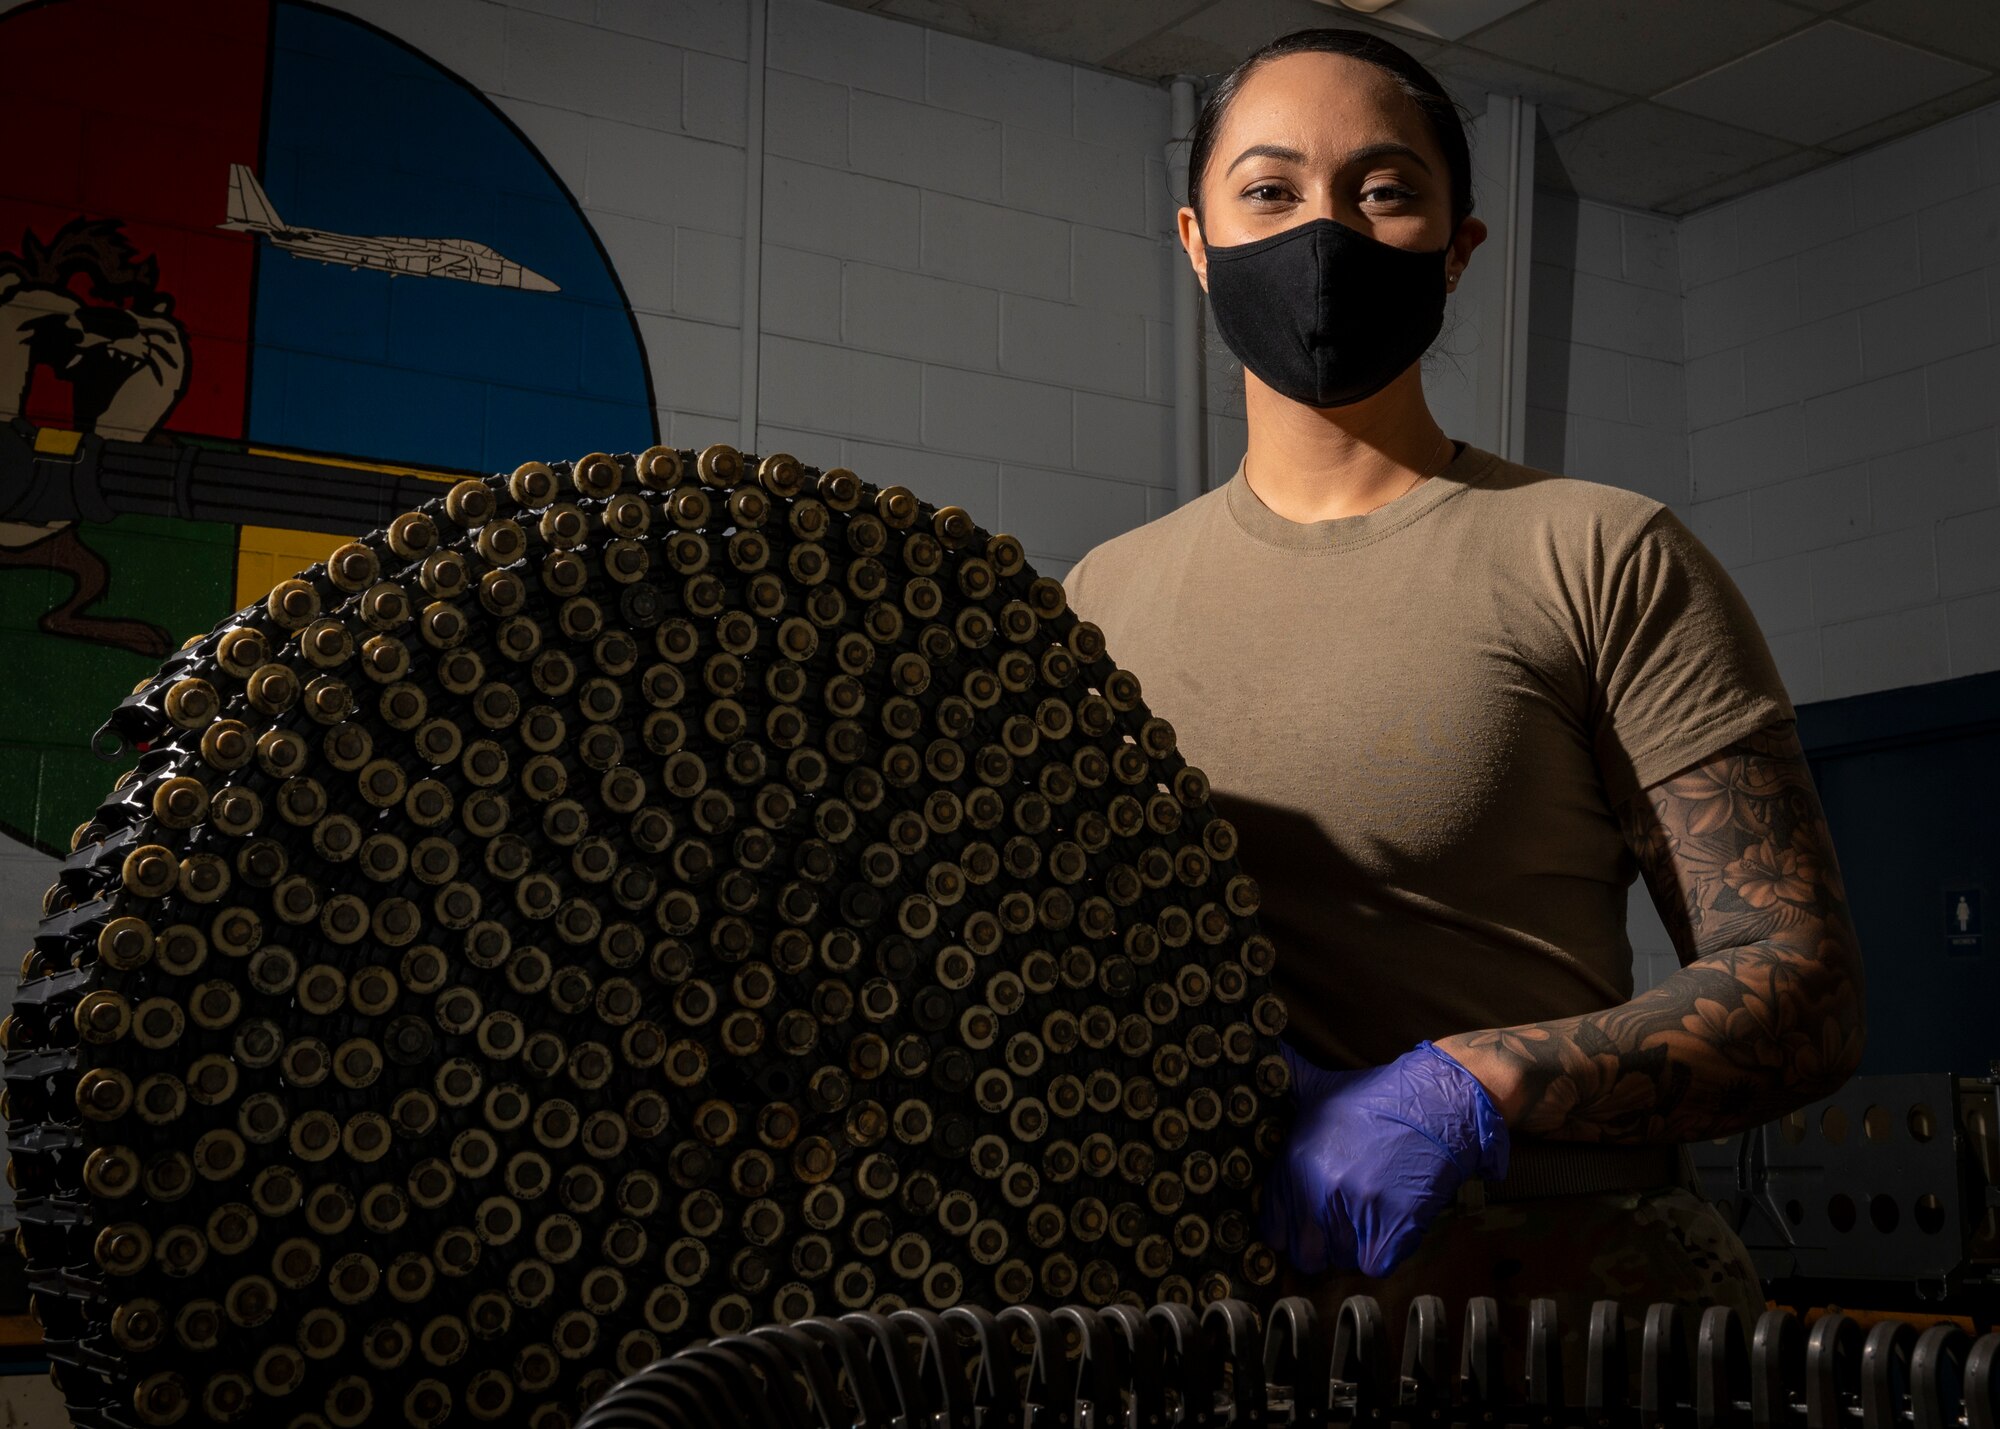 Staff Sgt. Dora Pulu, 4th Equipment Maintenance Squadron armament maintenance supervisor, poses next to an ammunition belt, at Seymour Johnson Air Force Base, North Carolina, Nov. 17, 2021.